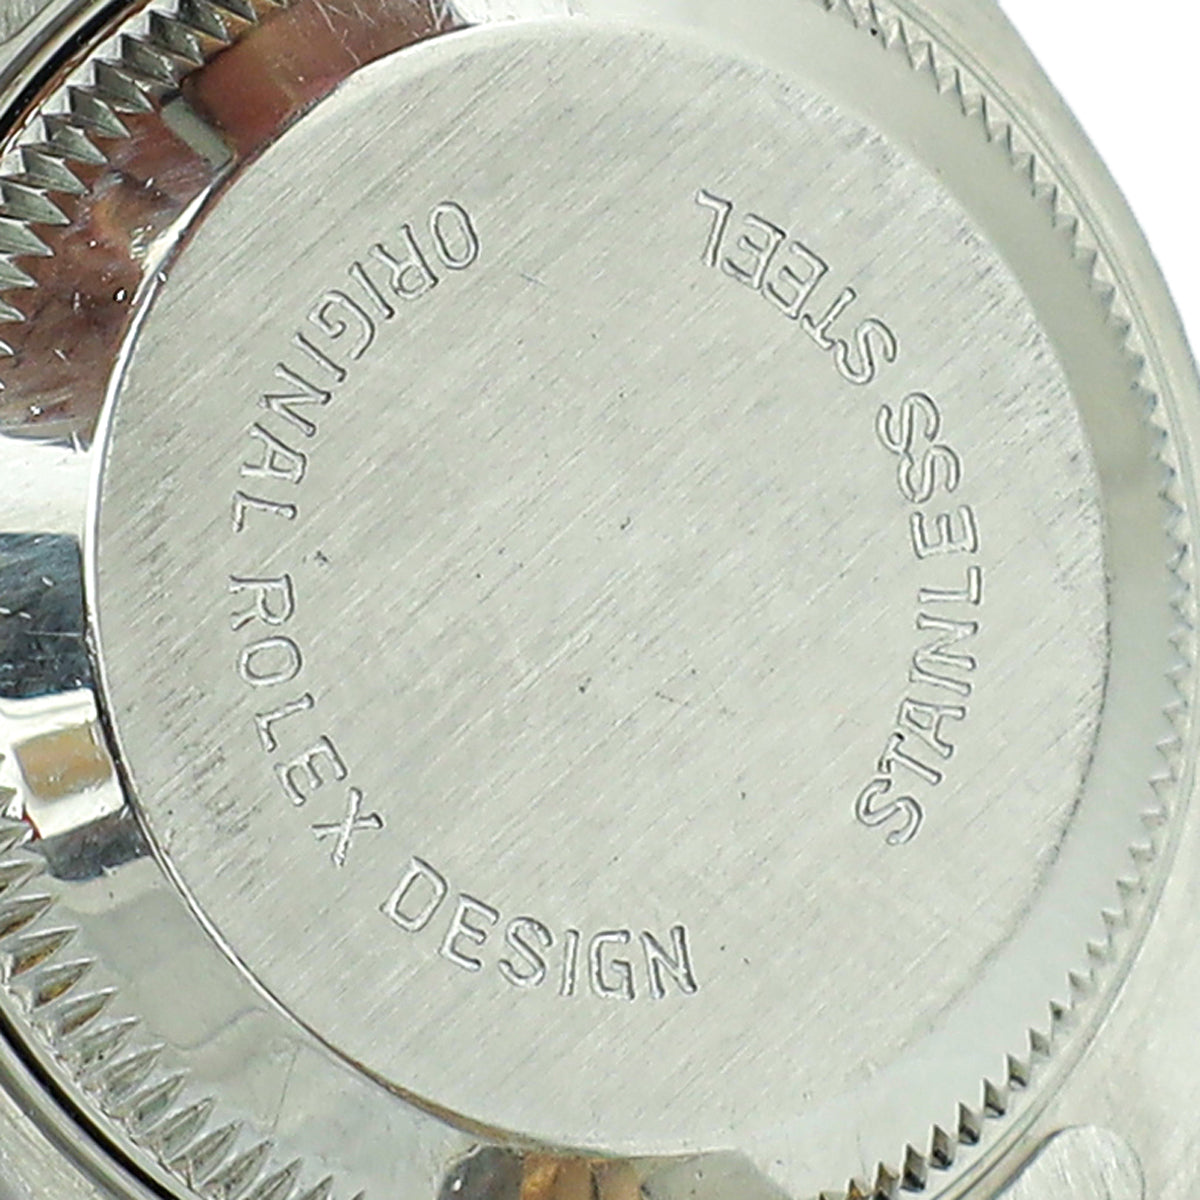 Rolex 18K Yellow Gold Diamond Dial Steel Datejust 26mm Watch